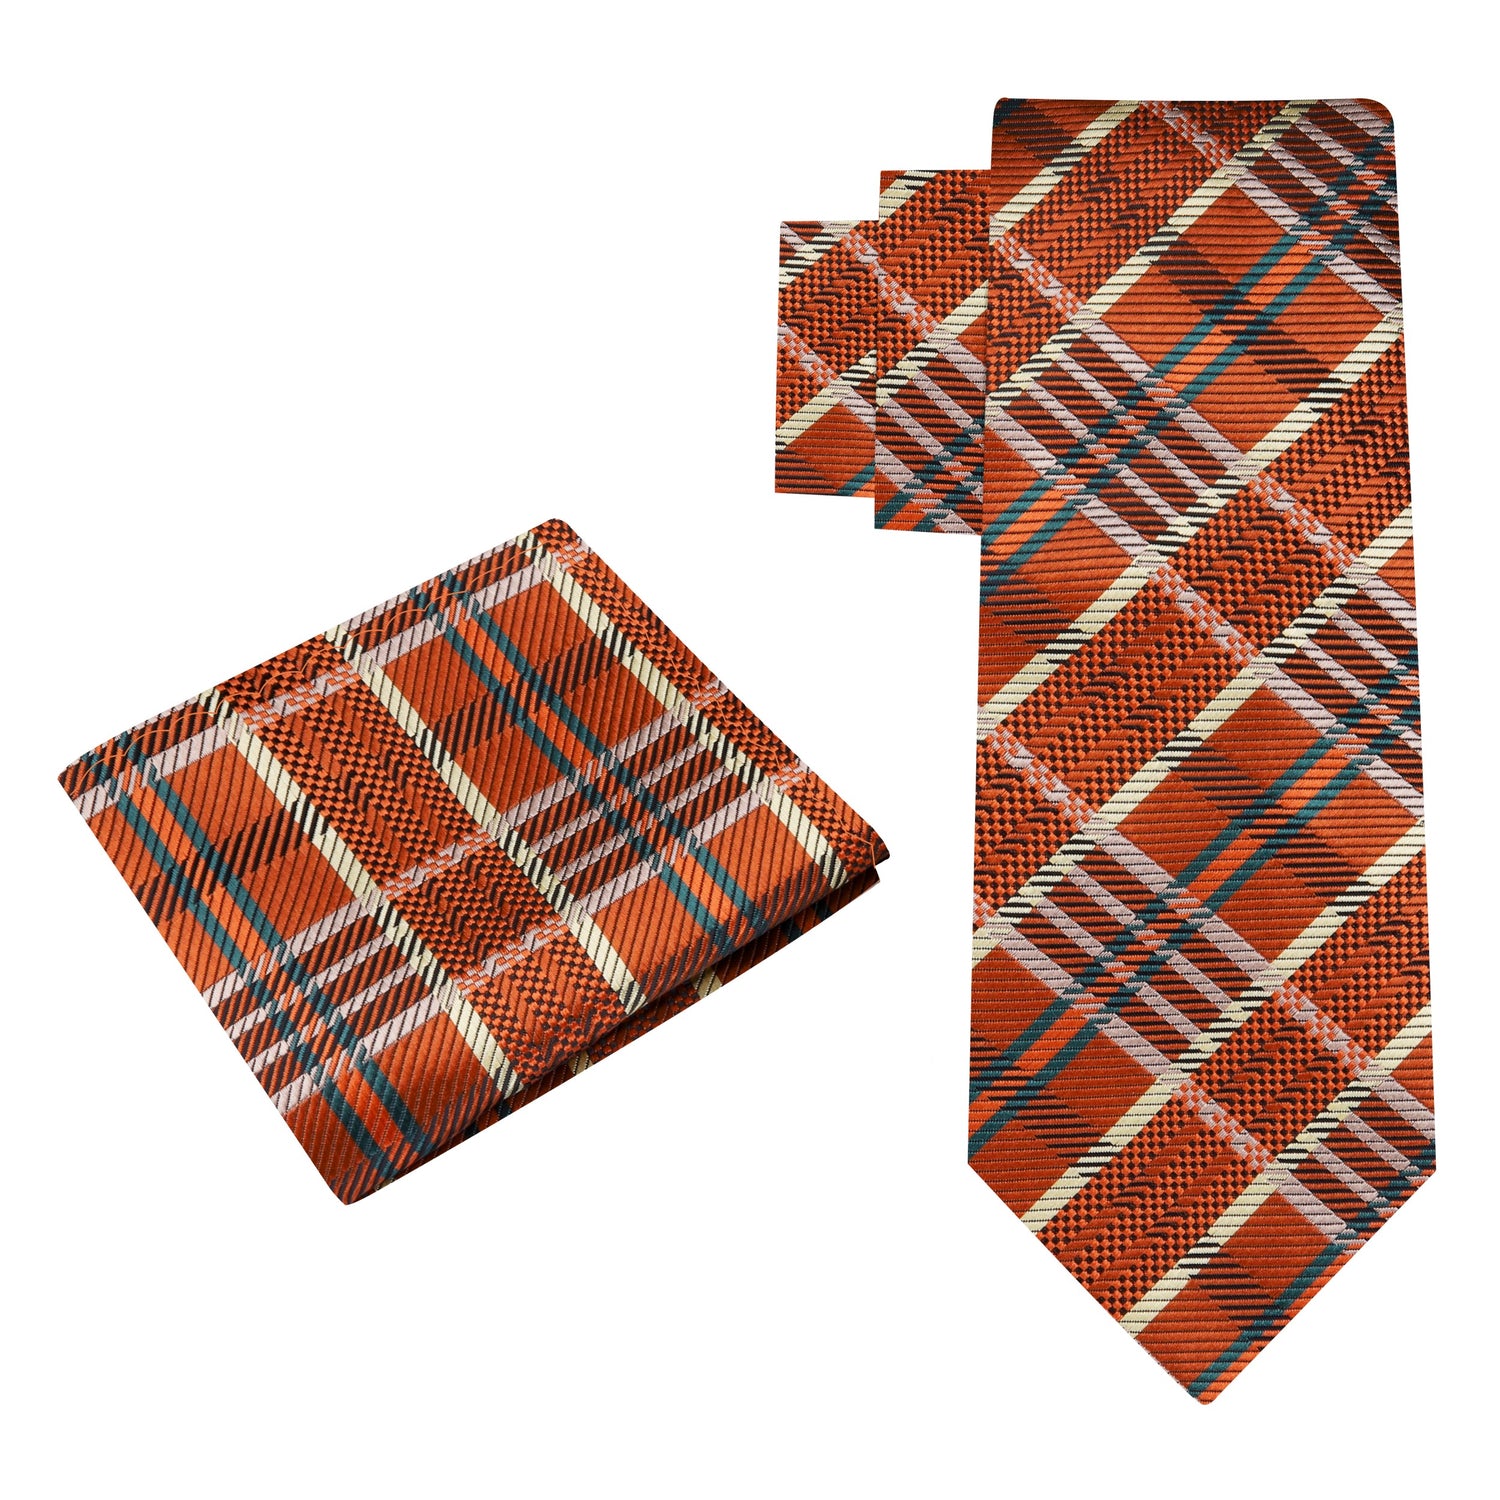 Alt View: A Orange, Yellow, Green, Blue Plaid Pattern Silk Necktie, Matching Pocket Square